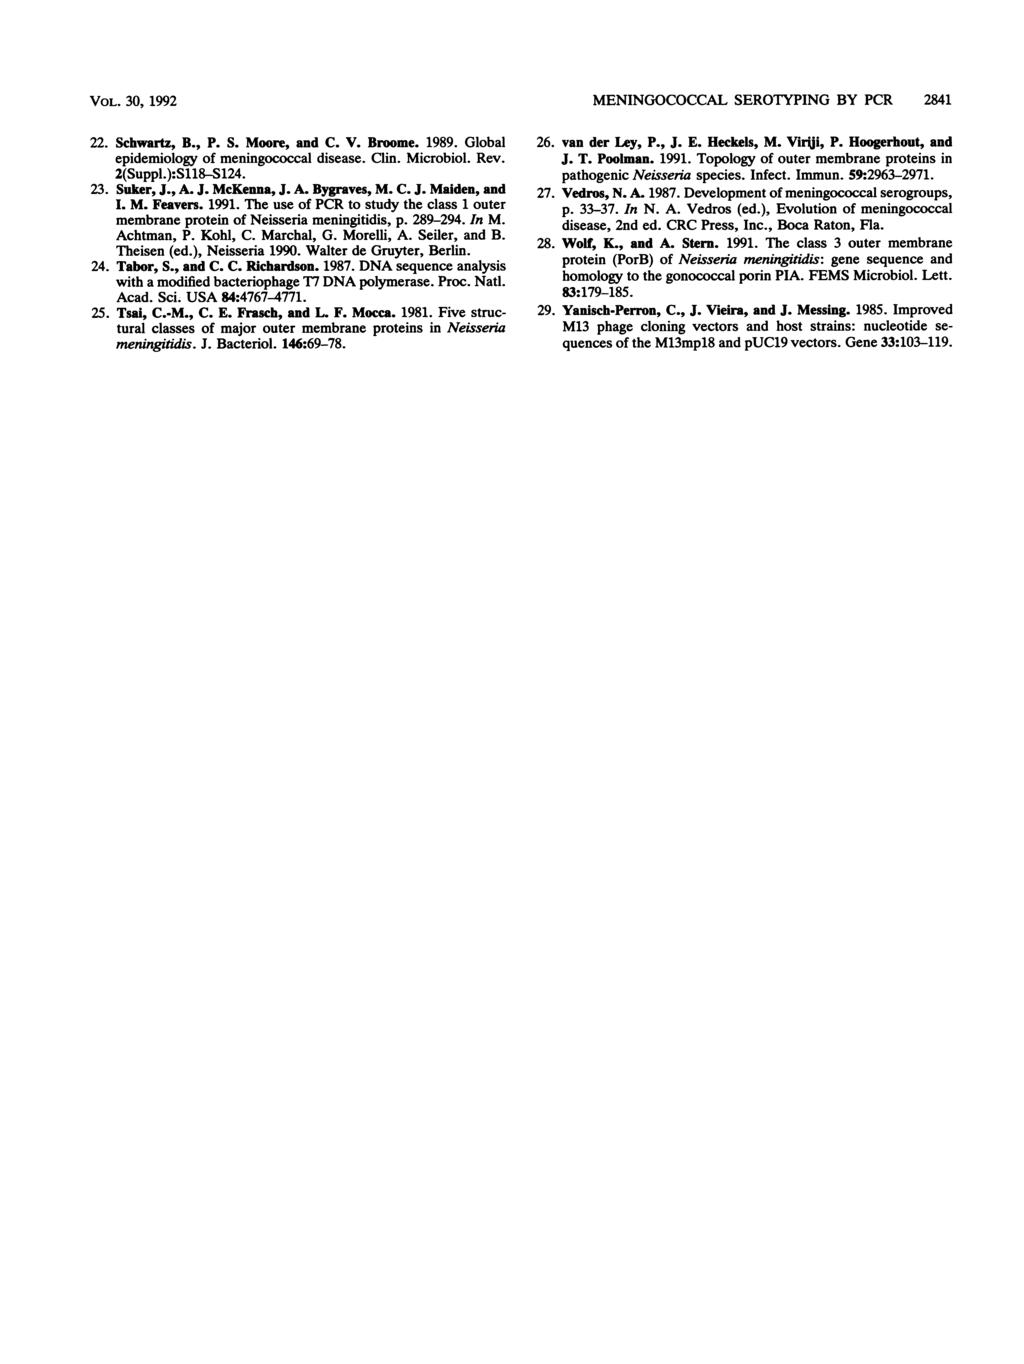 VOL. 30, 1992 22. Schwartz, B., P. S. Moore, and C. V. Broome. 1989. Global epidemiology of meningococcal disease. Clin. Microbiol. Rev. 2(Suppl.):S118-S124. 23. Suker, J., A. J. McKenna, J. A. Bygraves, M.